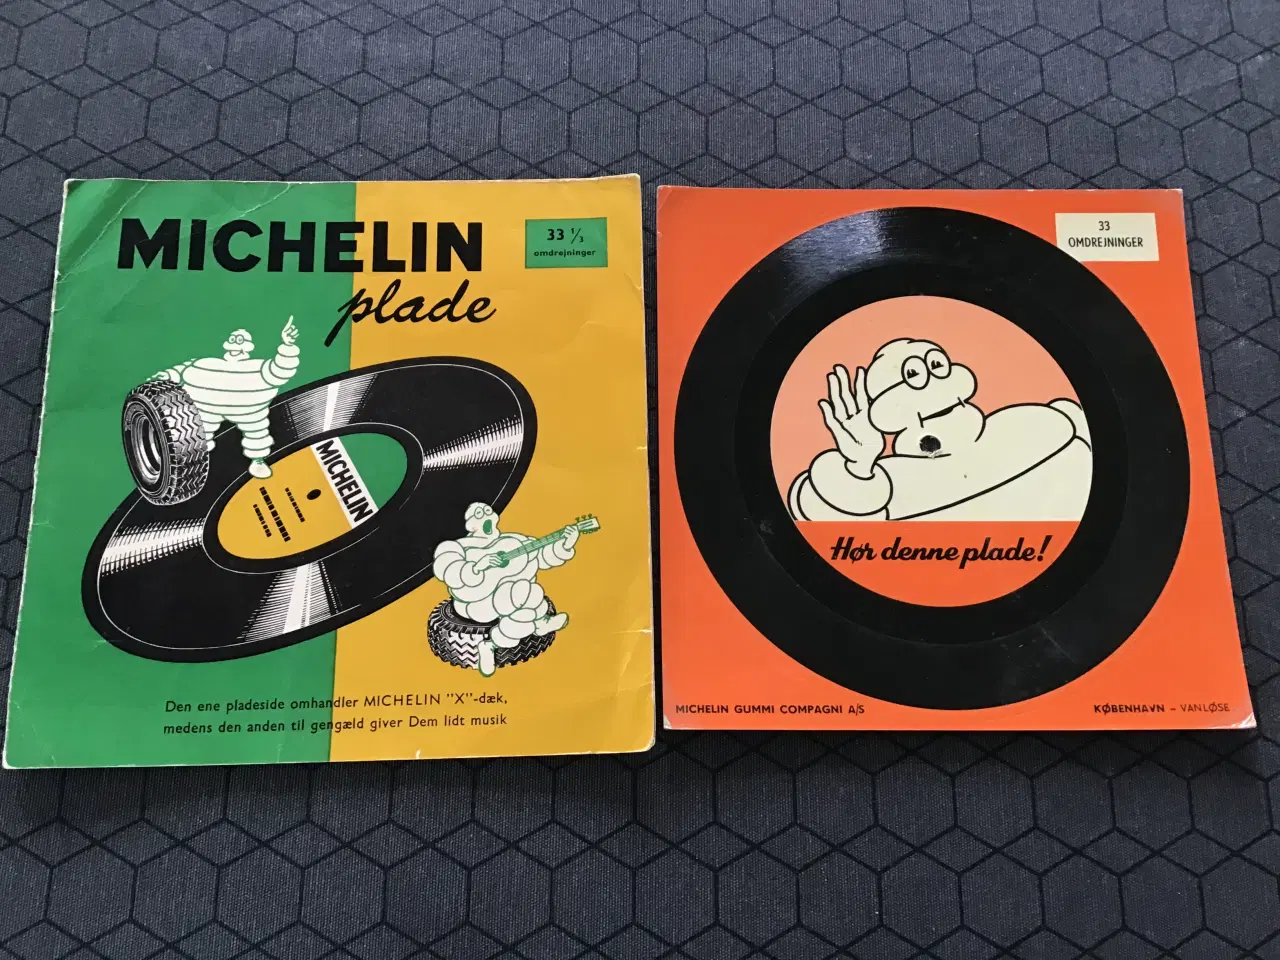 Billede 1 - Michelin reklame gammelt 